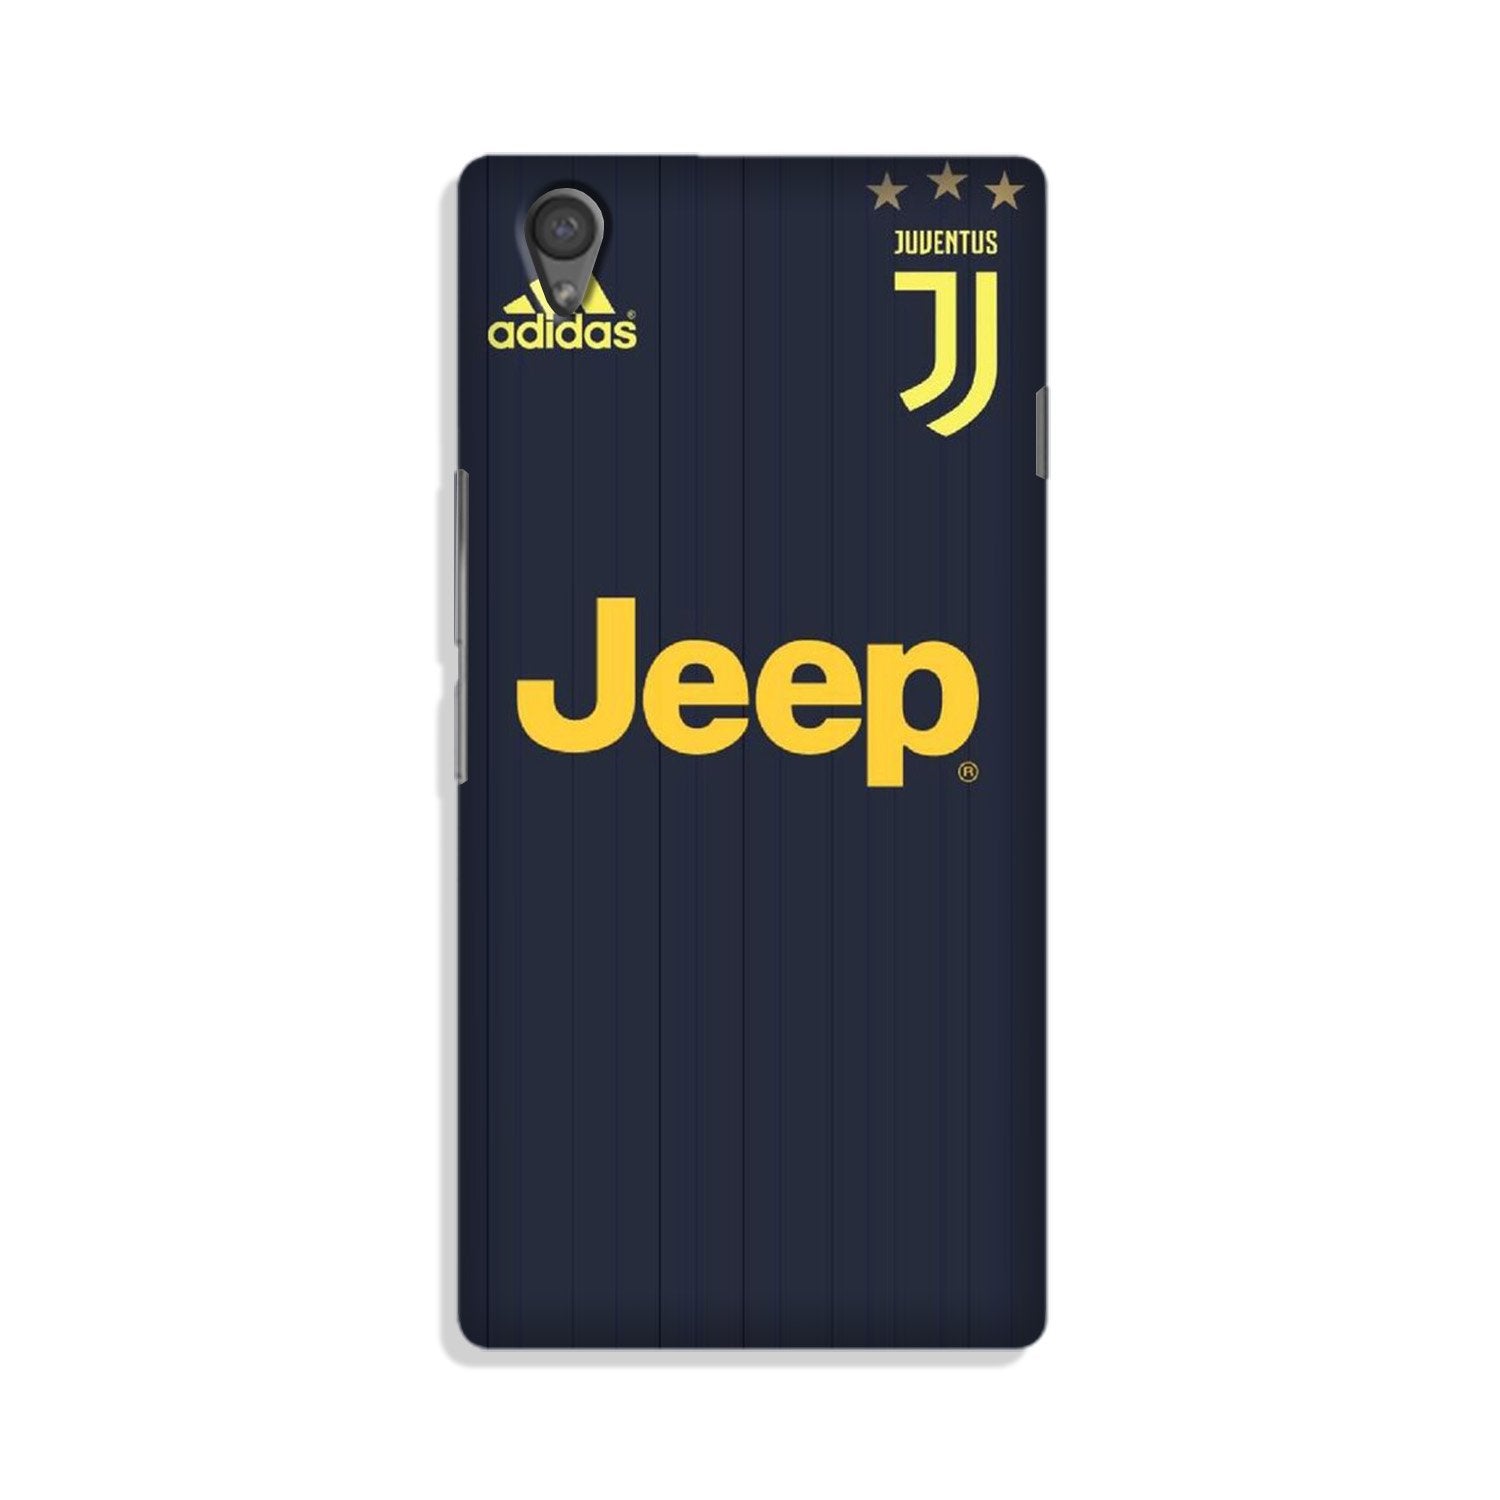 Jeep Juventus Case for Vivo Y51L(Design - 161)